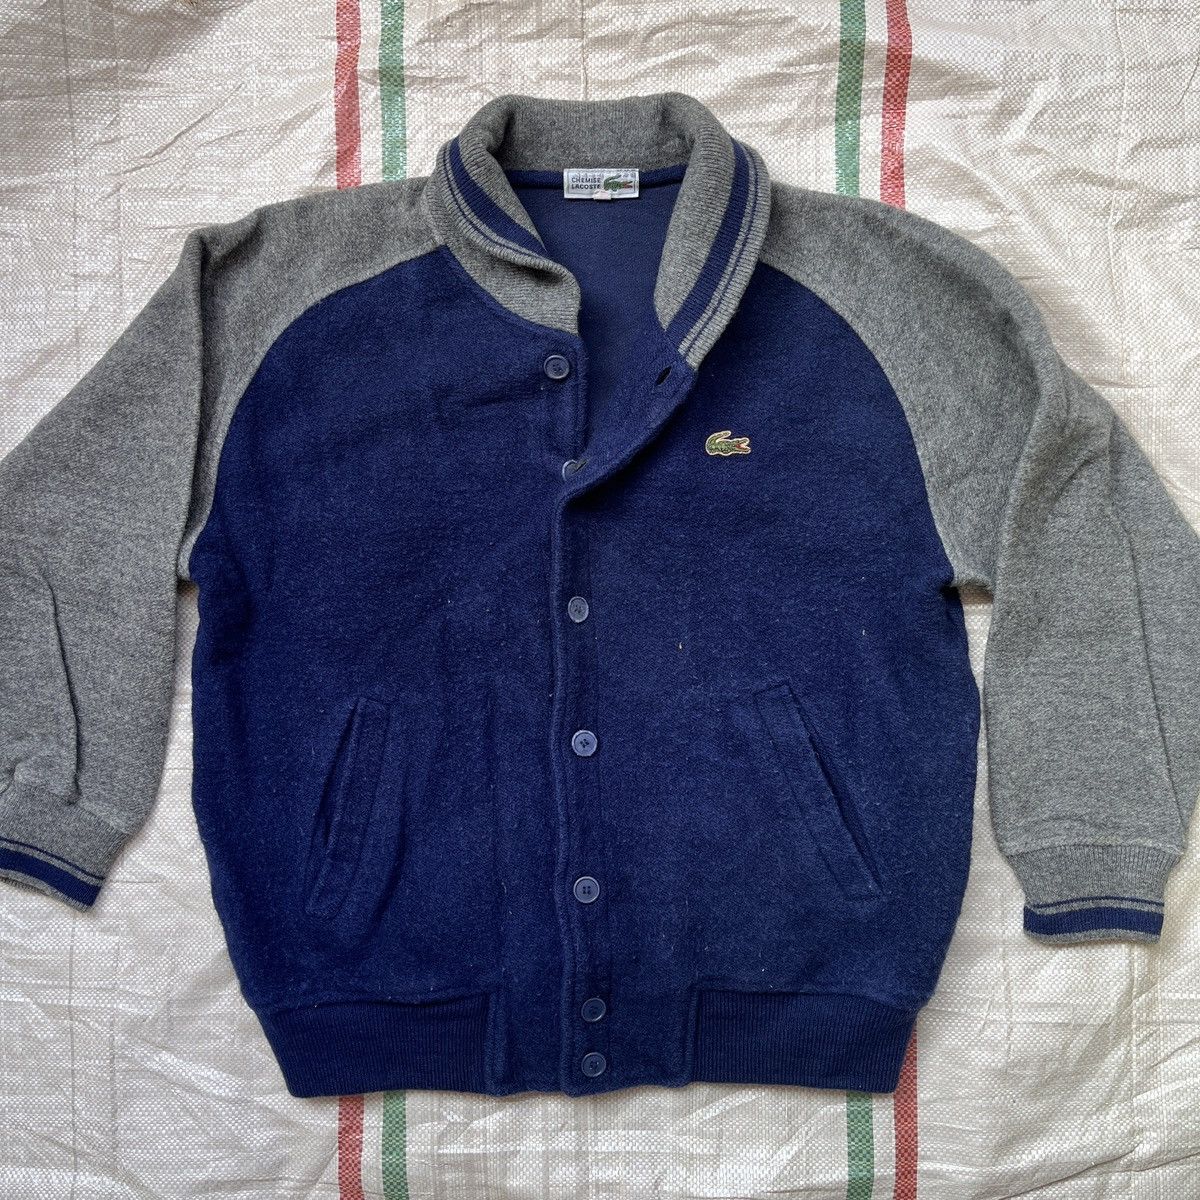 Bomber Style Jacket Lacoste Vintage 80s Sweater Japan - 17